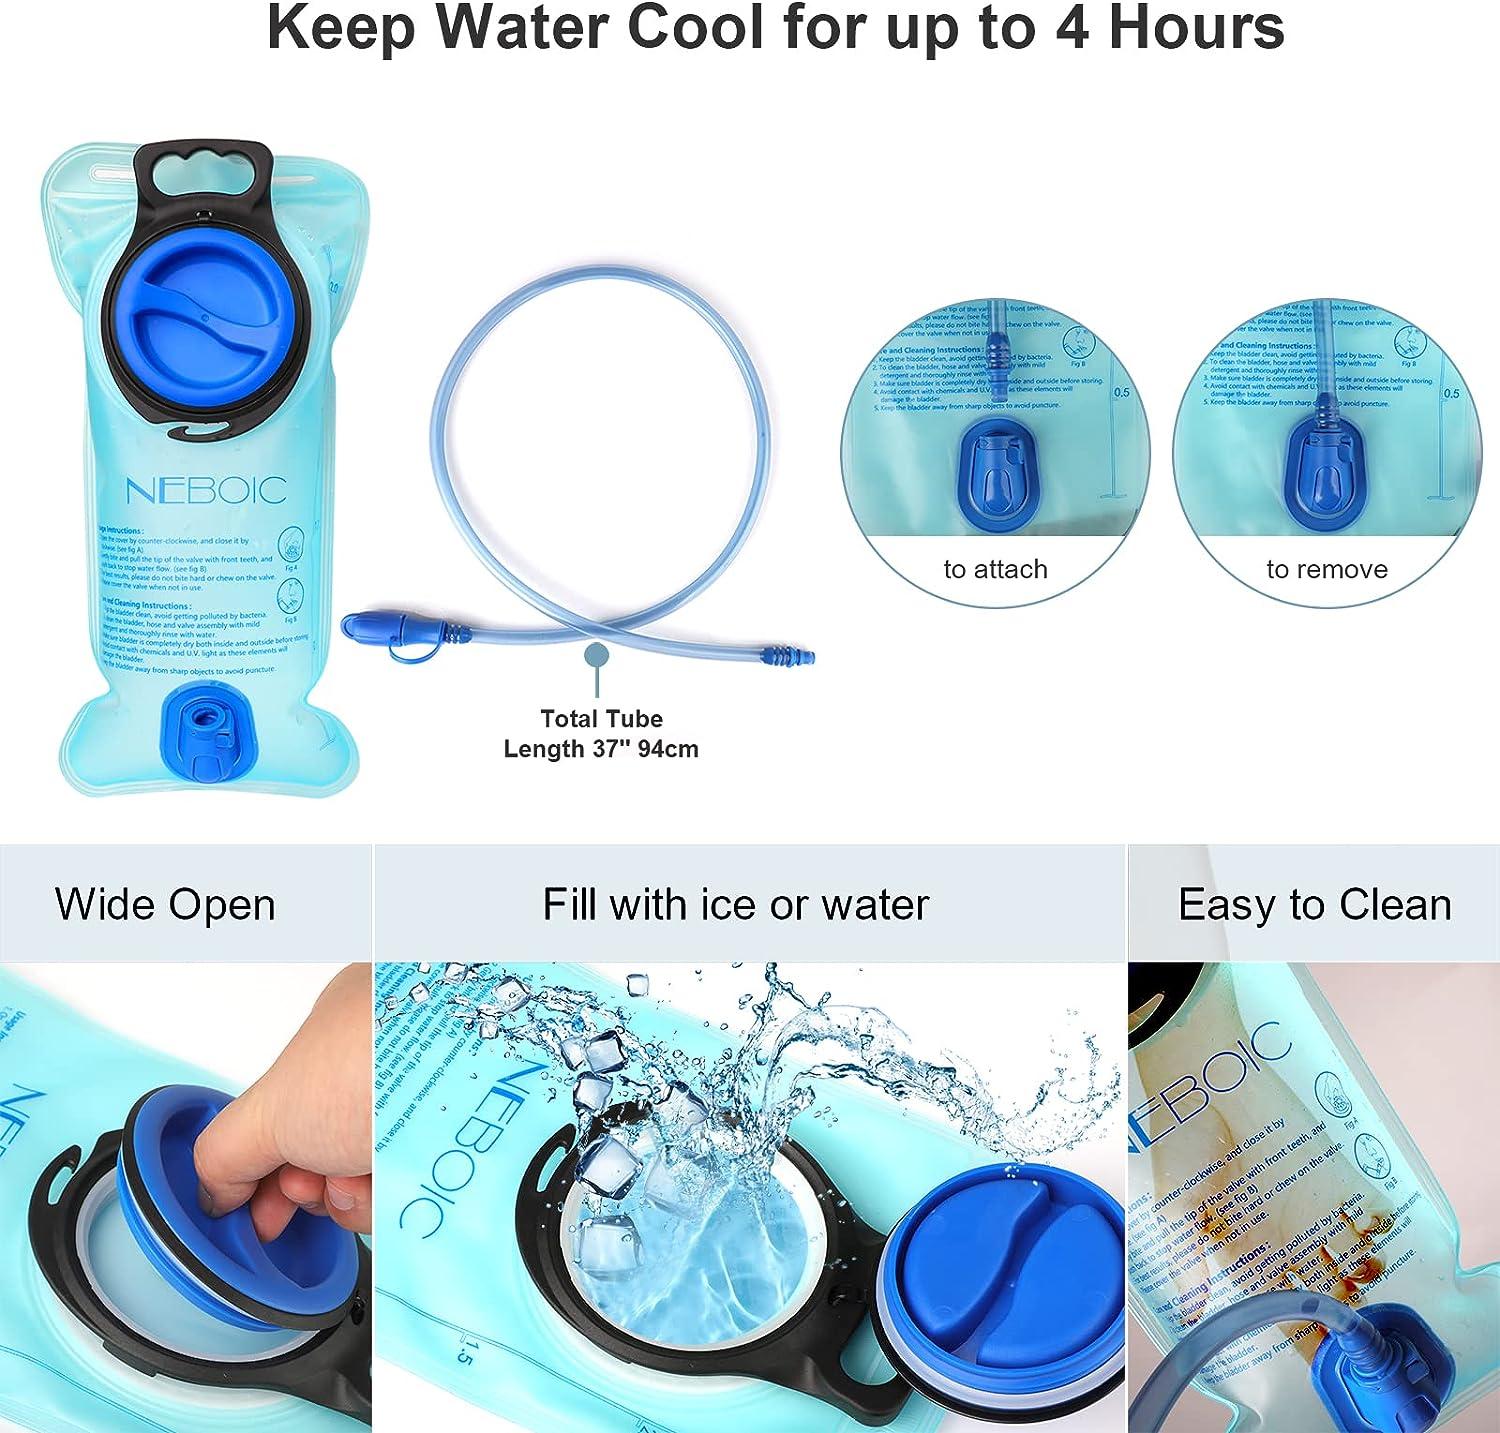 Hydration Pack / Water Bladder Tips & Tricks 